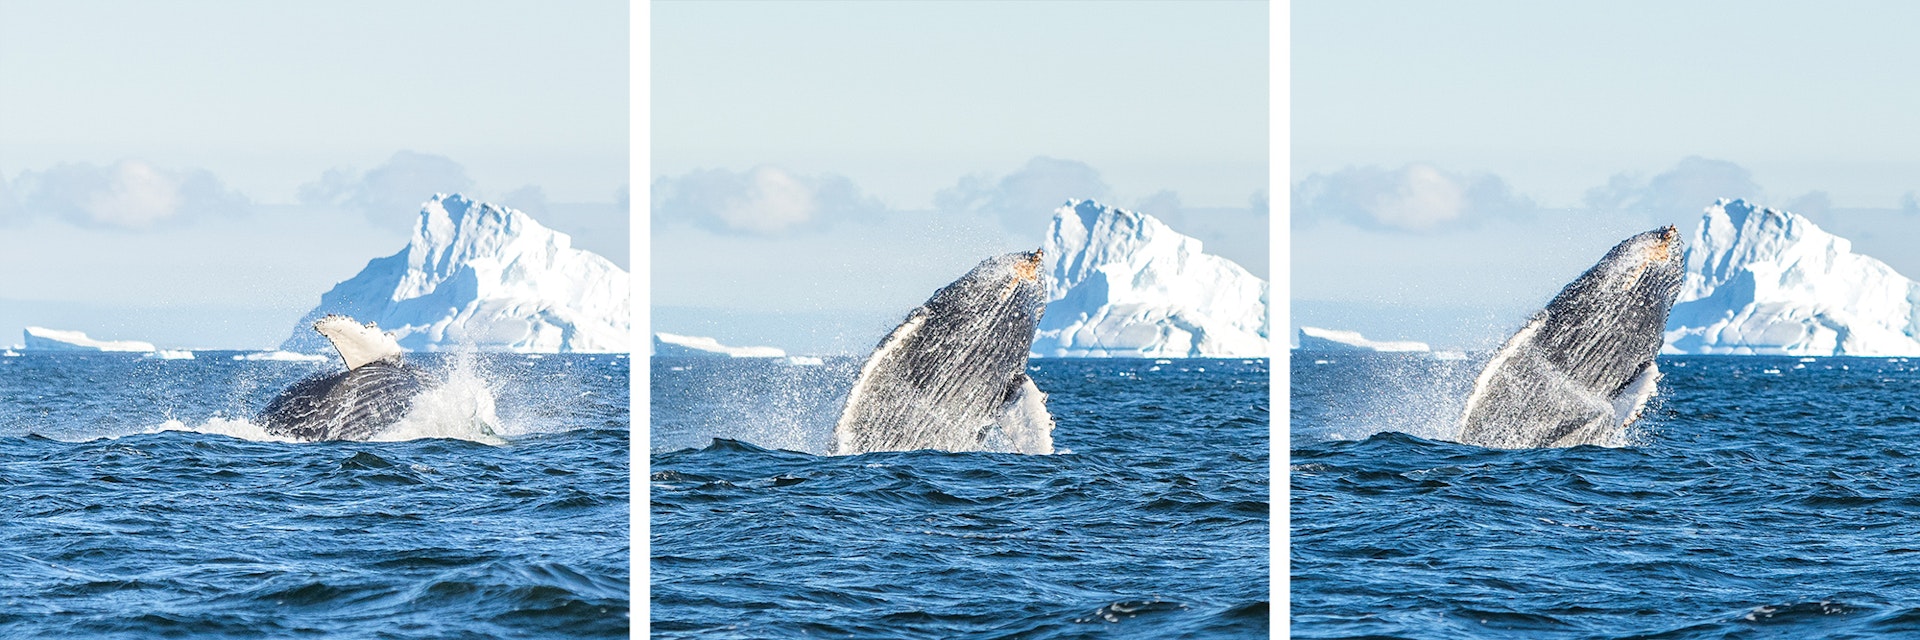 Whale breaching in Antartica. 